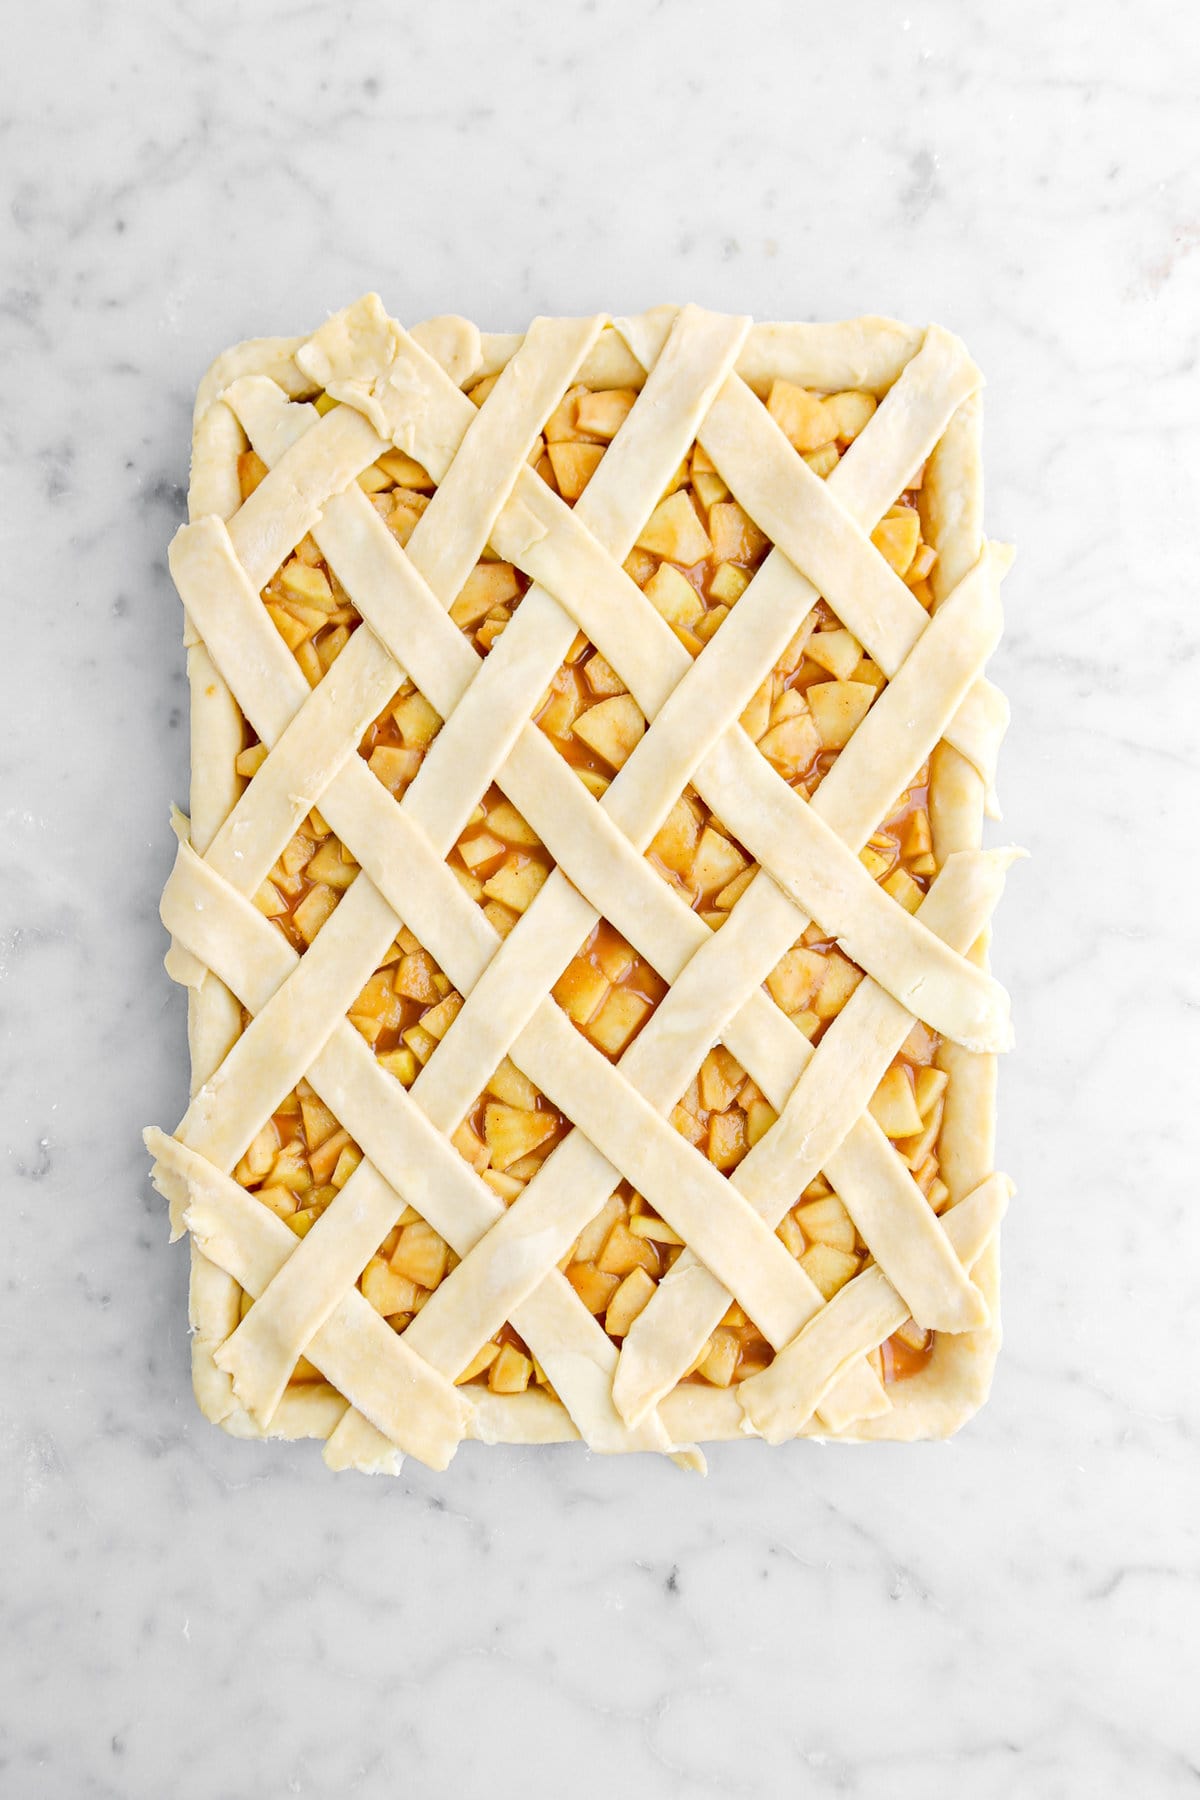 latticed top on apple pie.